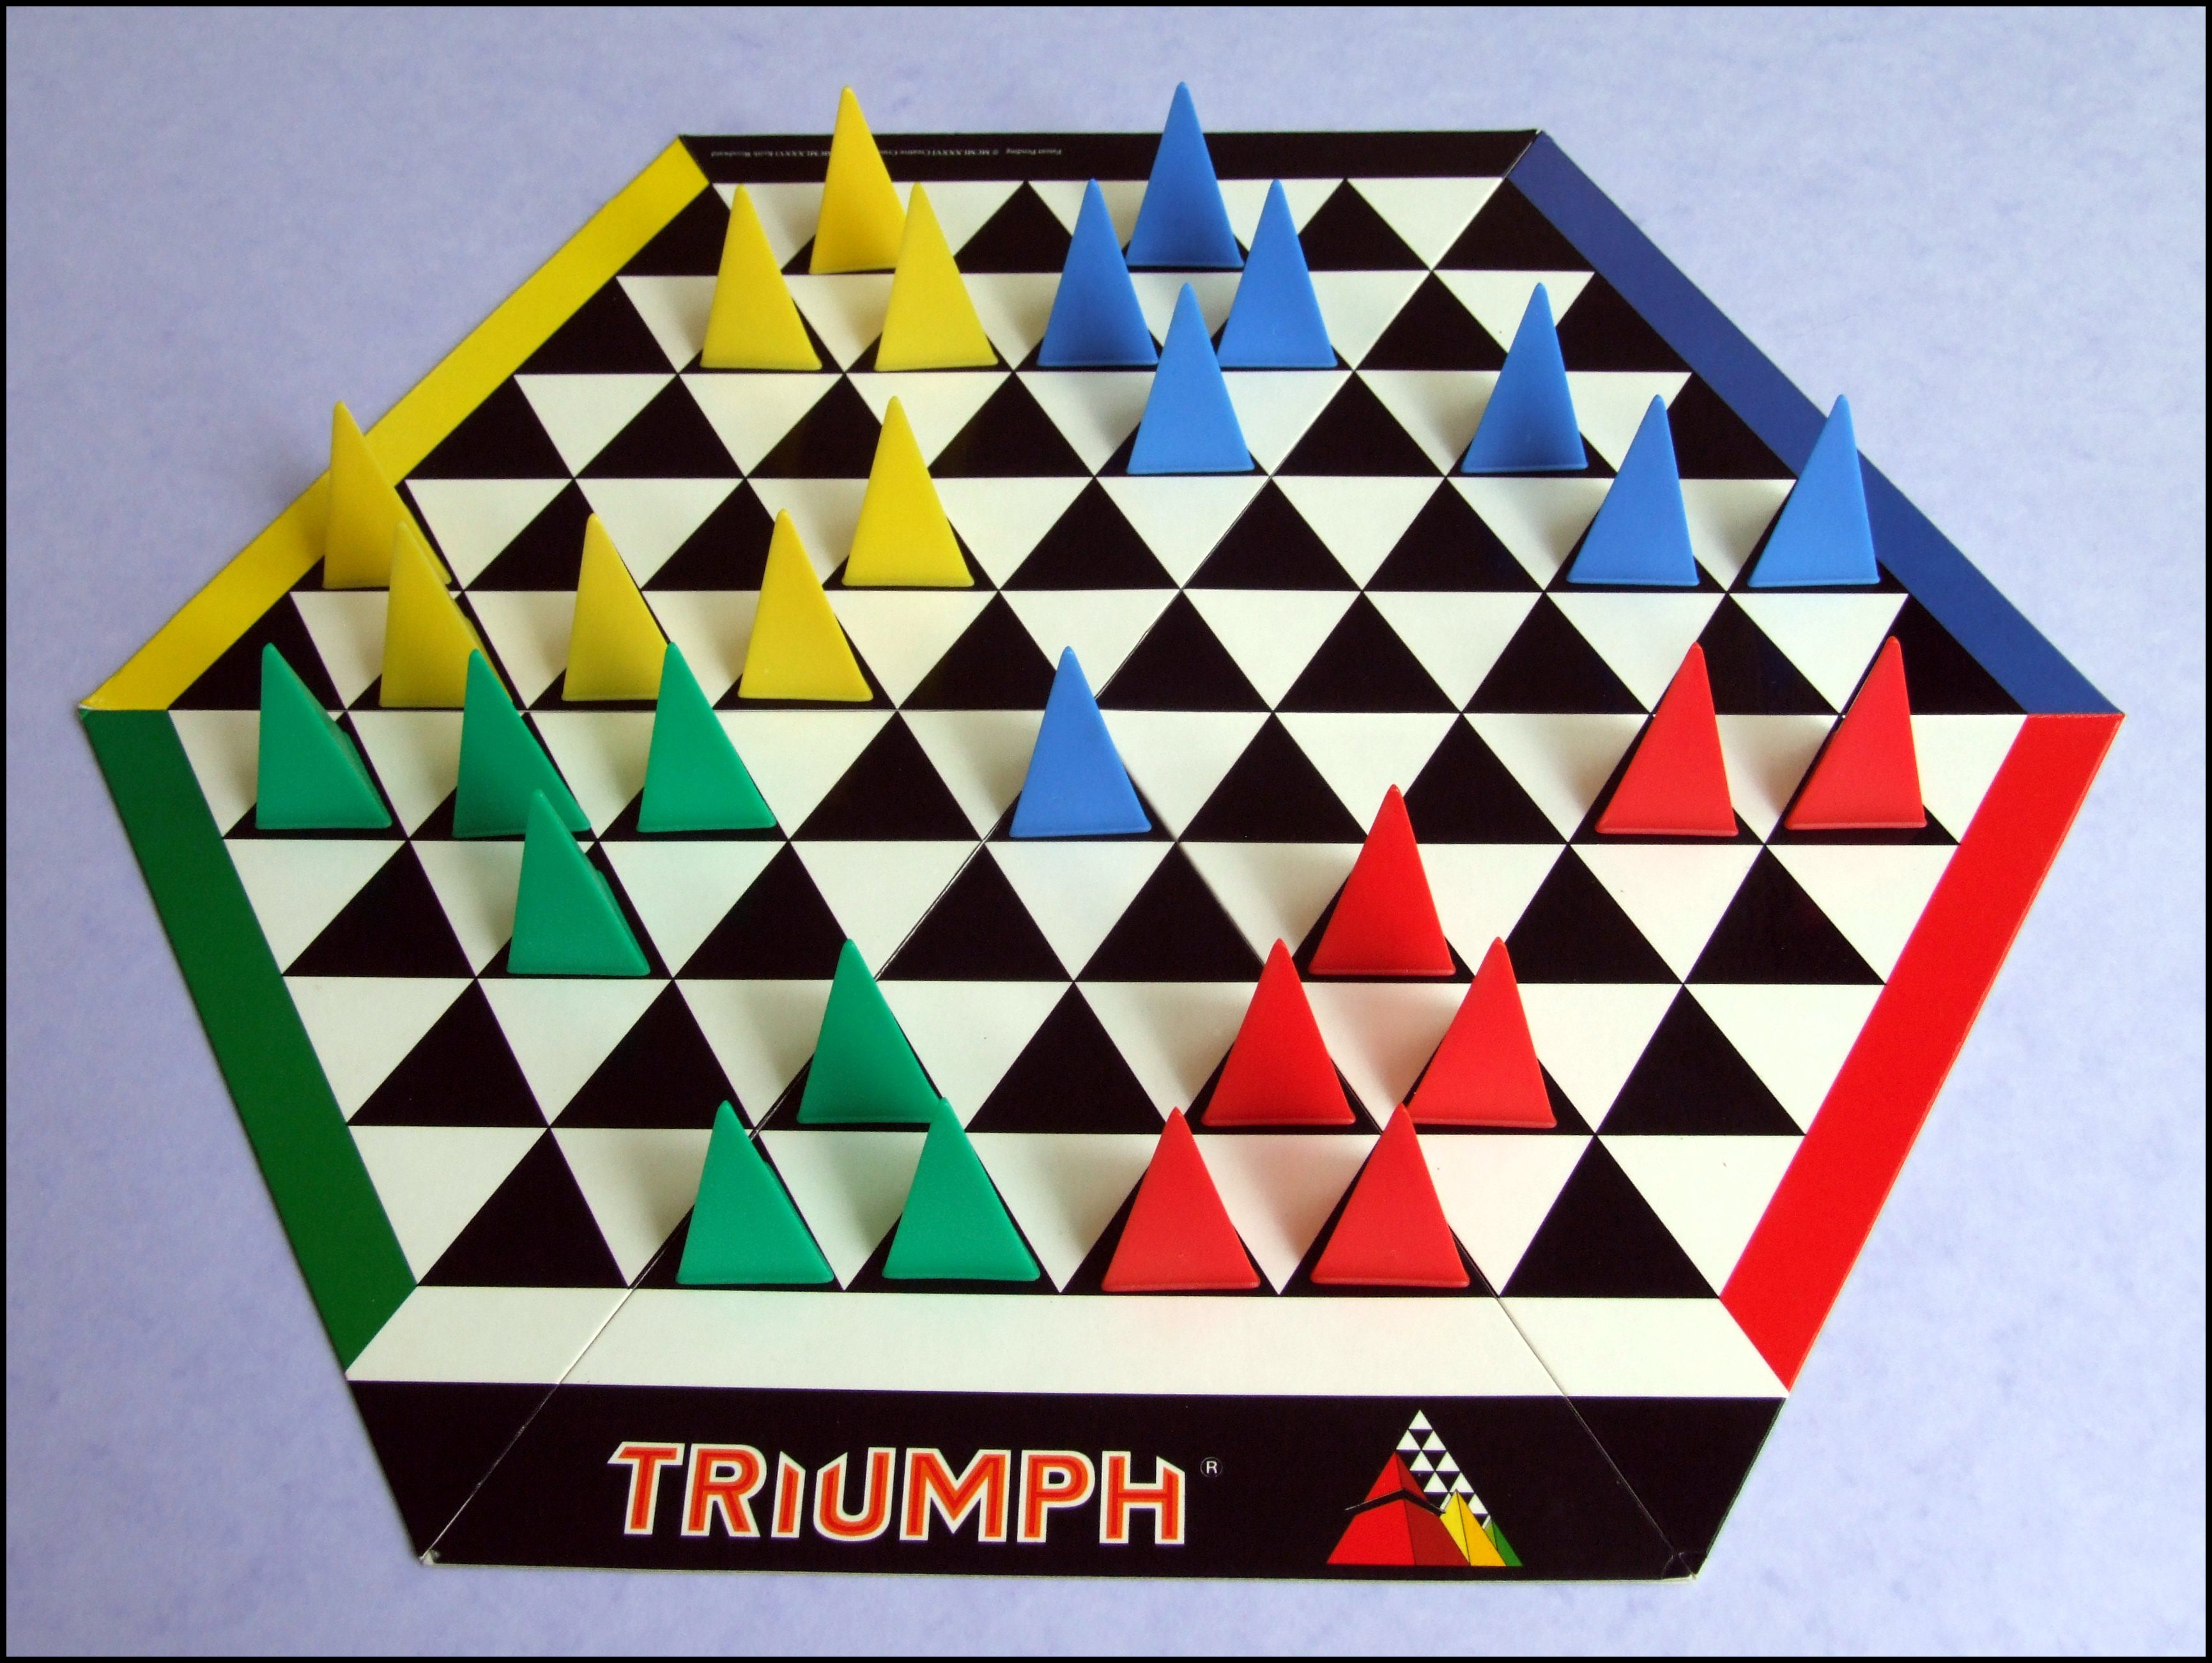 Triumph - Mid Game